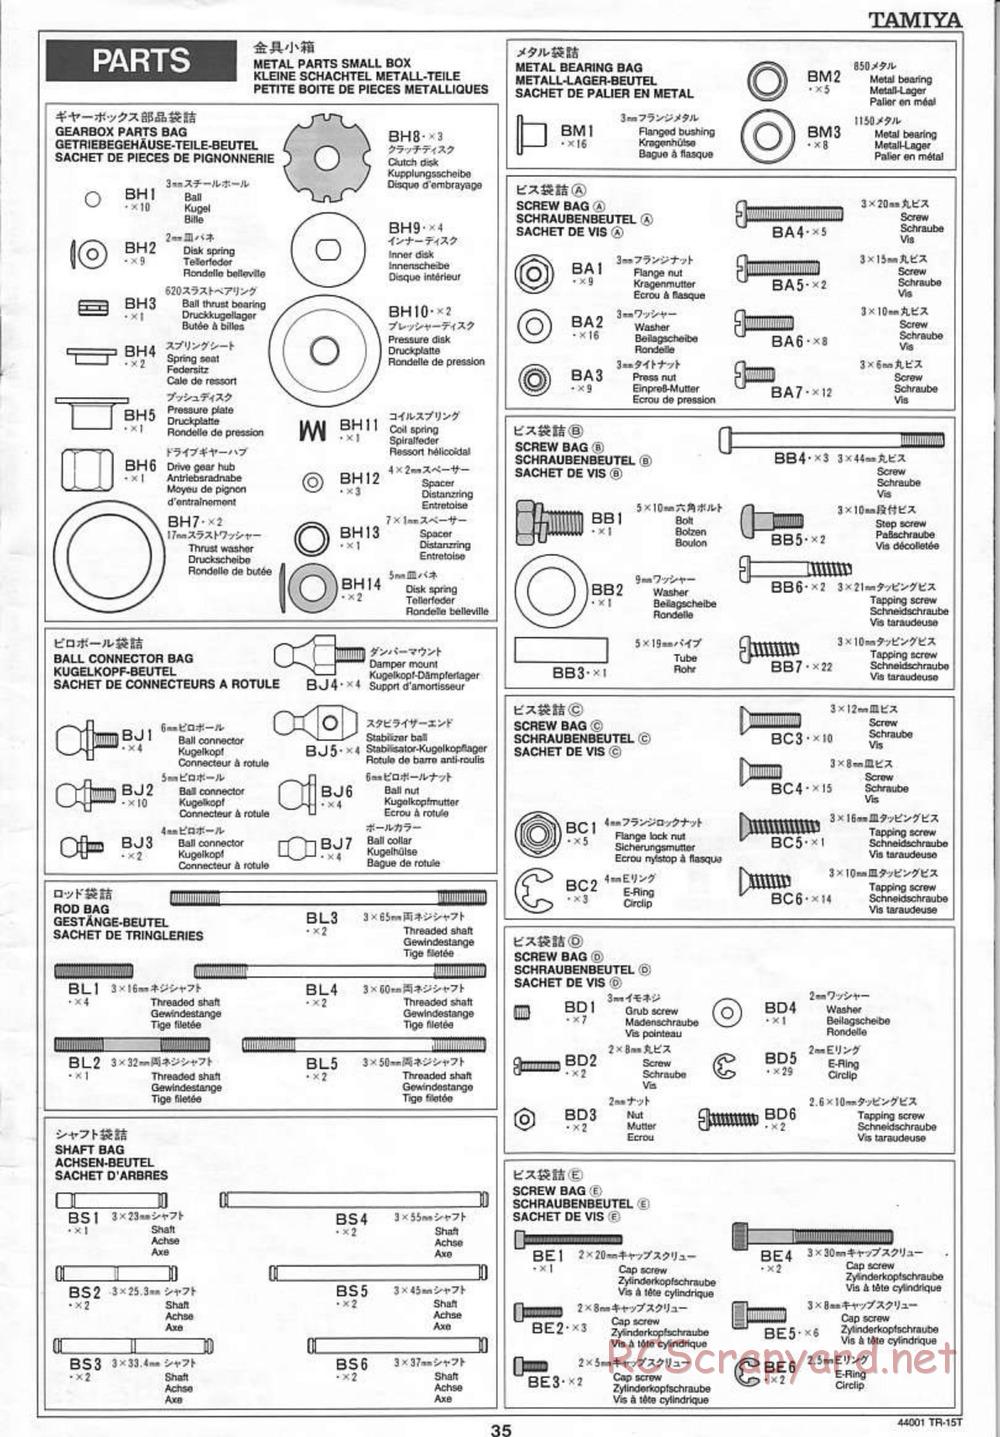 Tamiya - Stadium Racing Truck TR-15T Chassis - Manual - Page 35